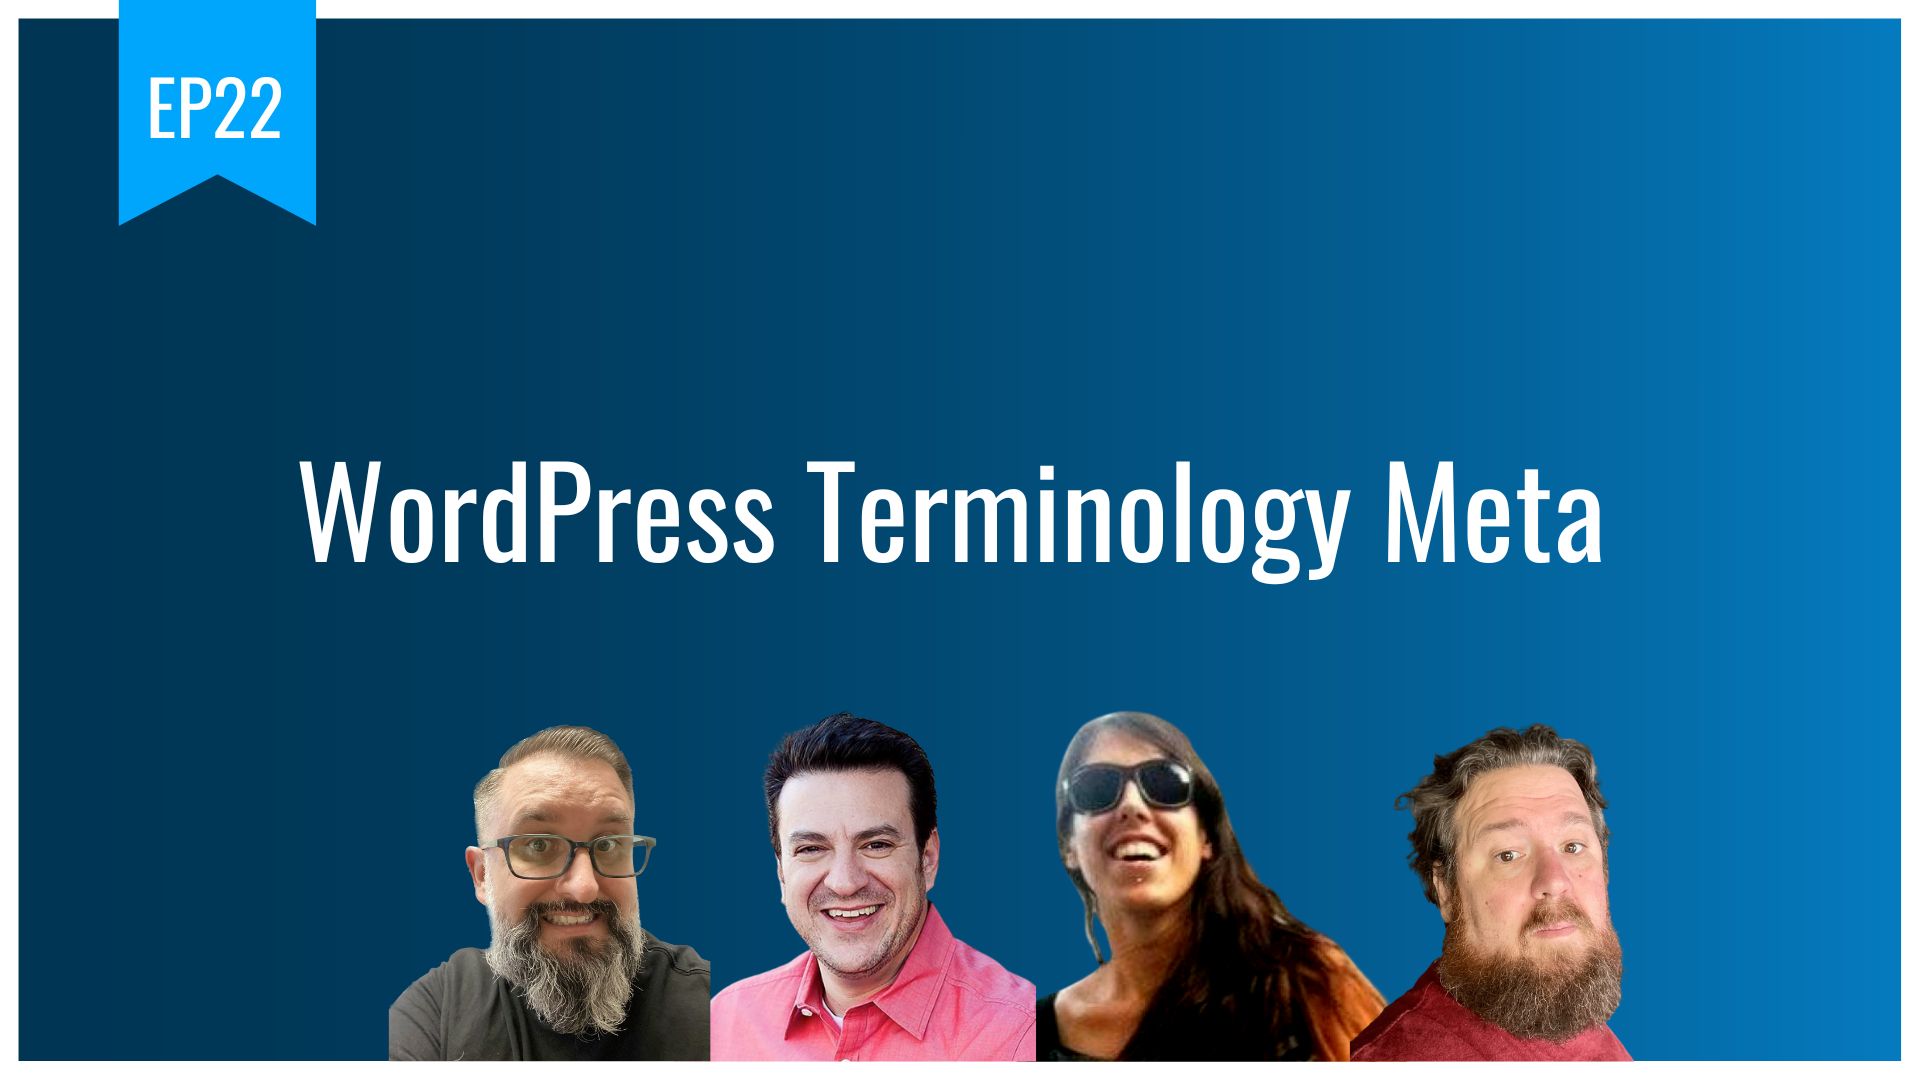 EP22 - WordPress Terminology Meta